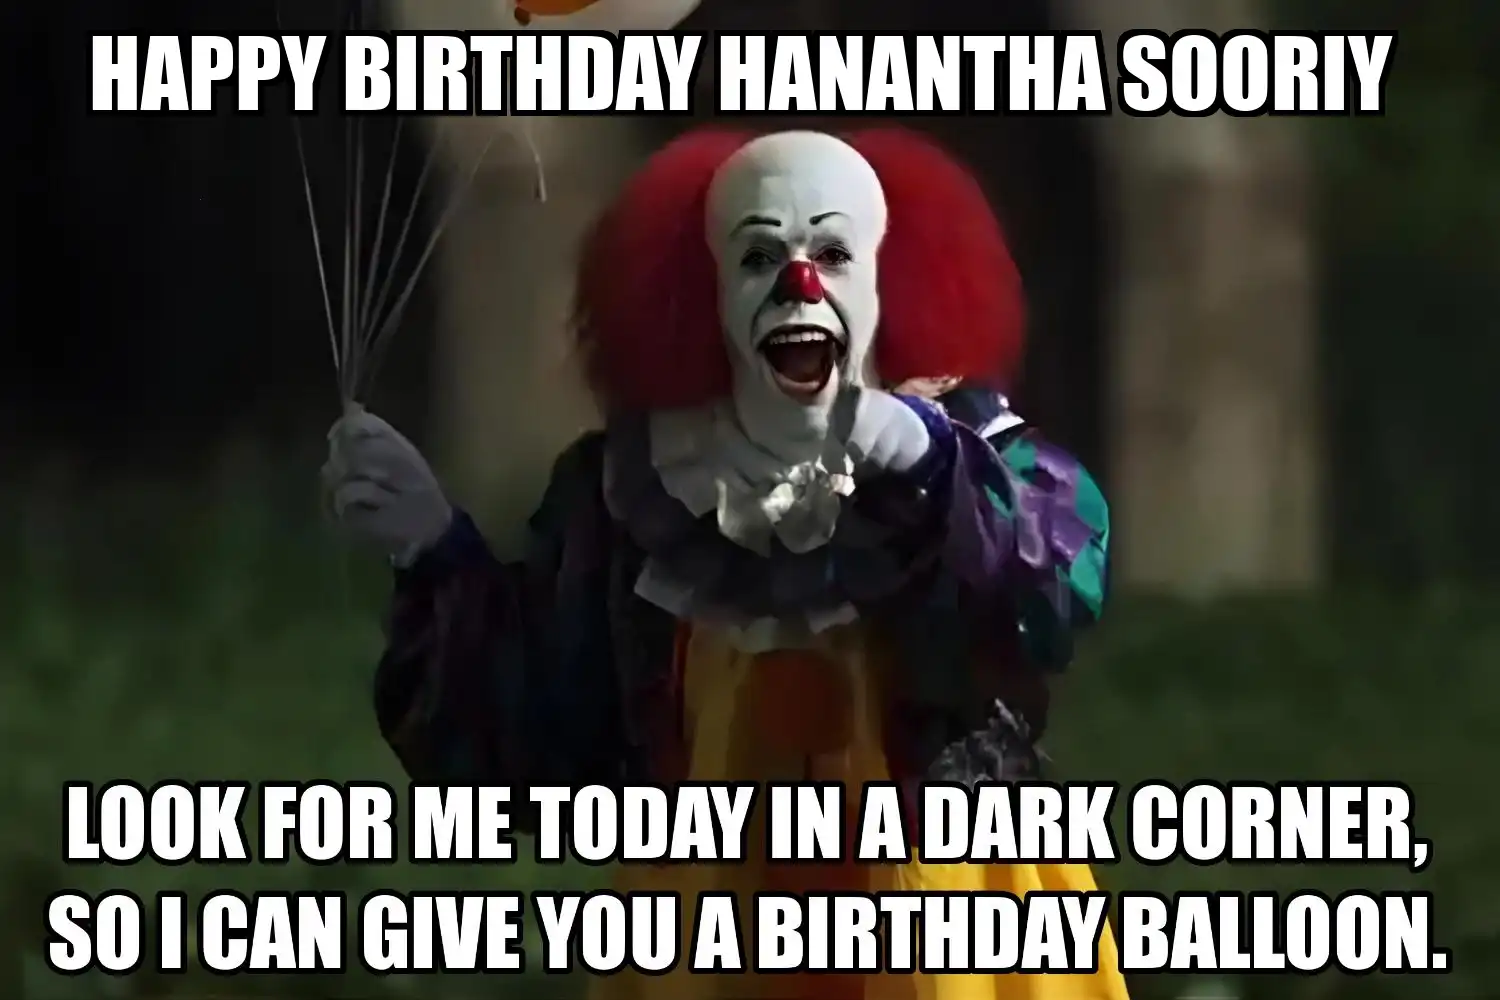 Happy Birthday Hanantha sooriy I Can Give You A Balloon Meme